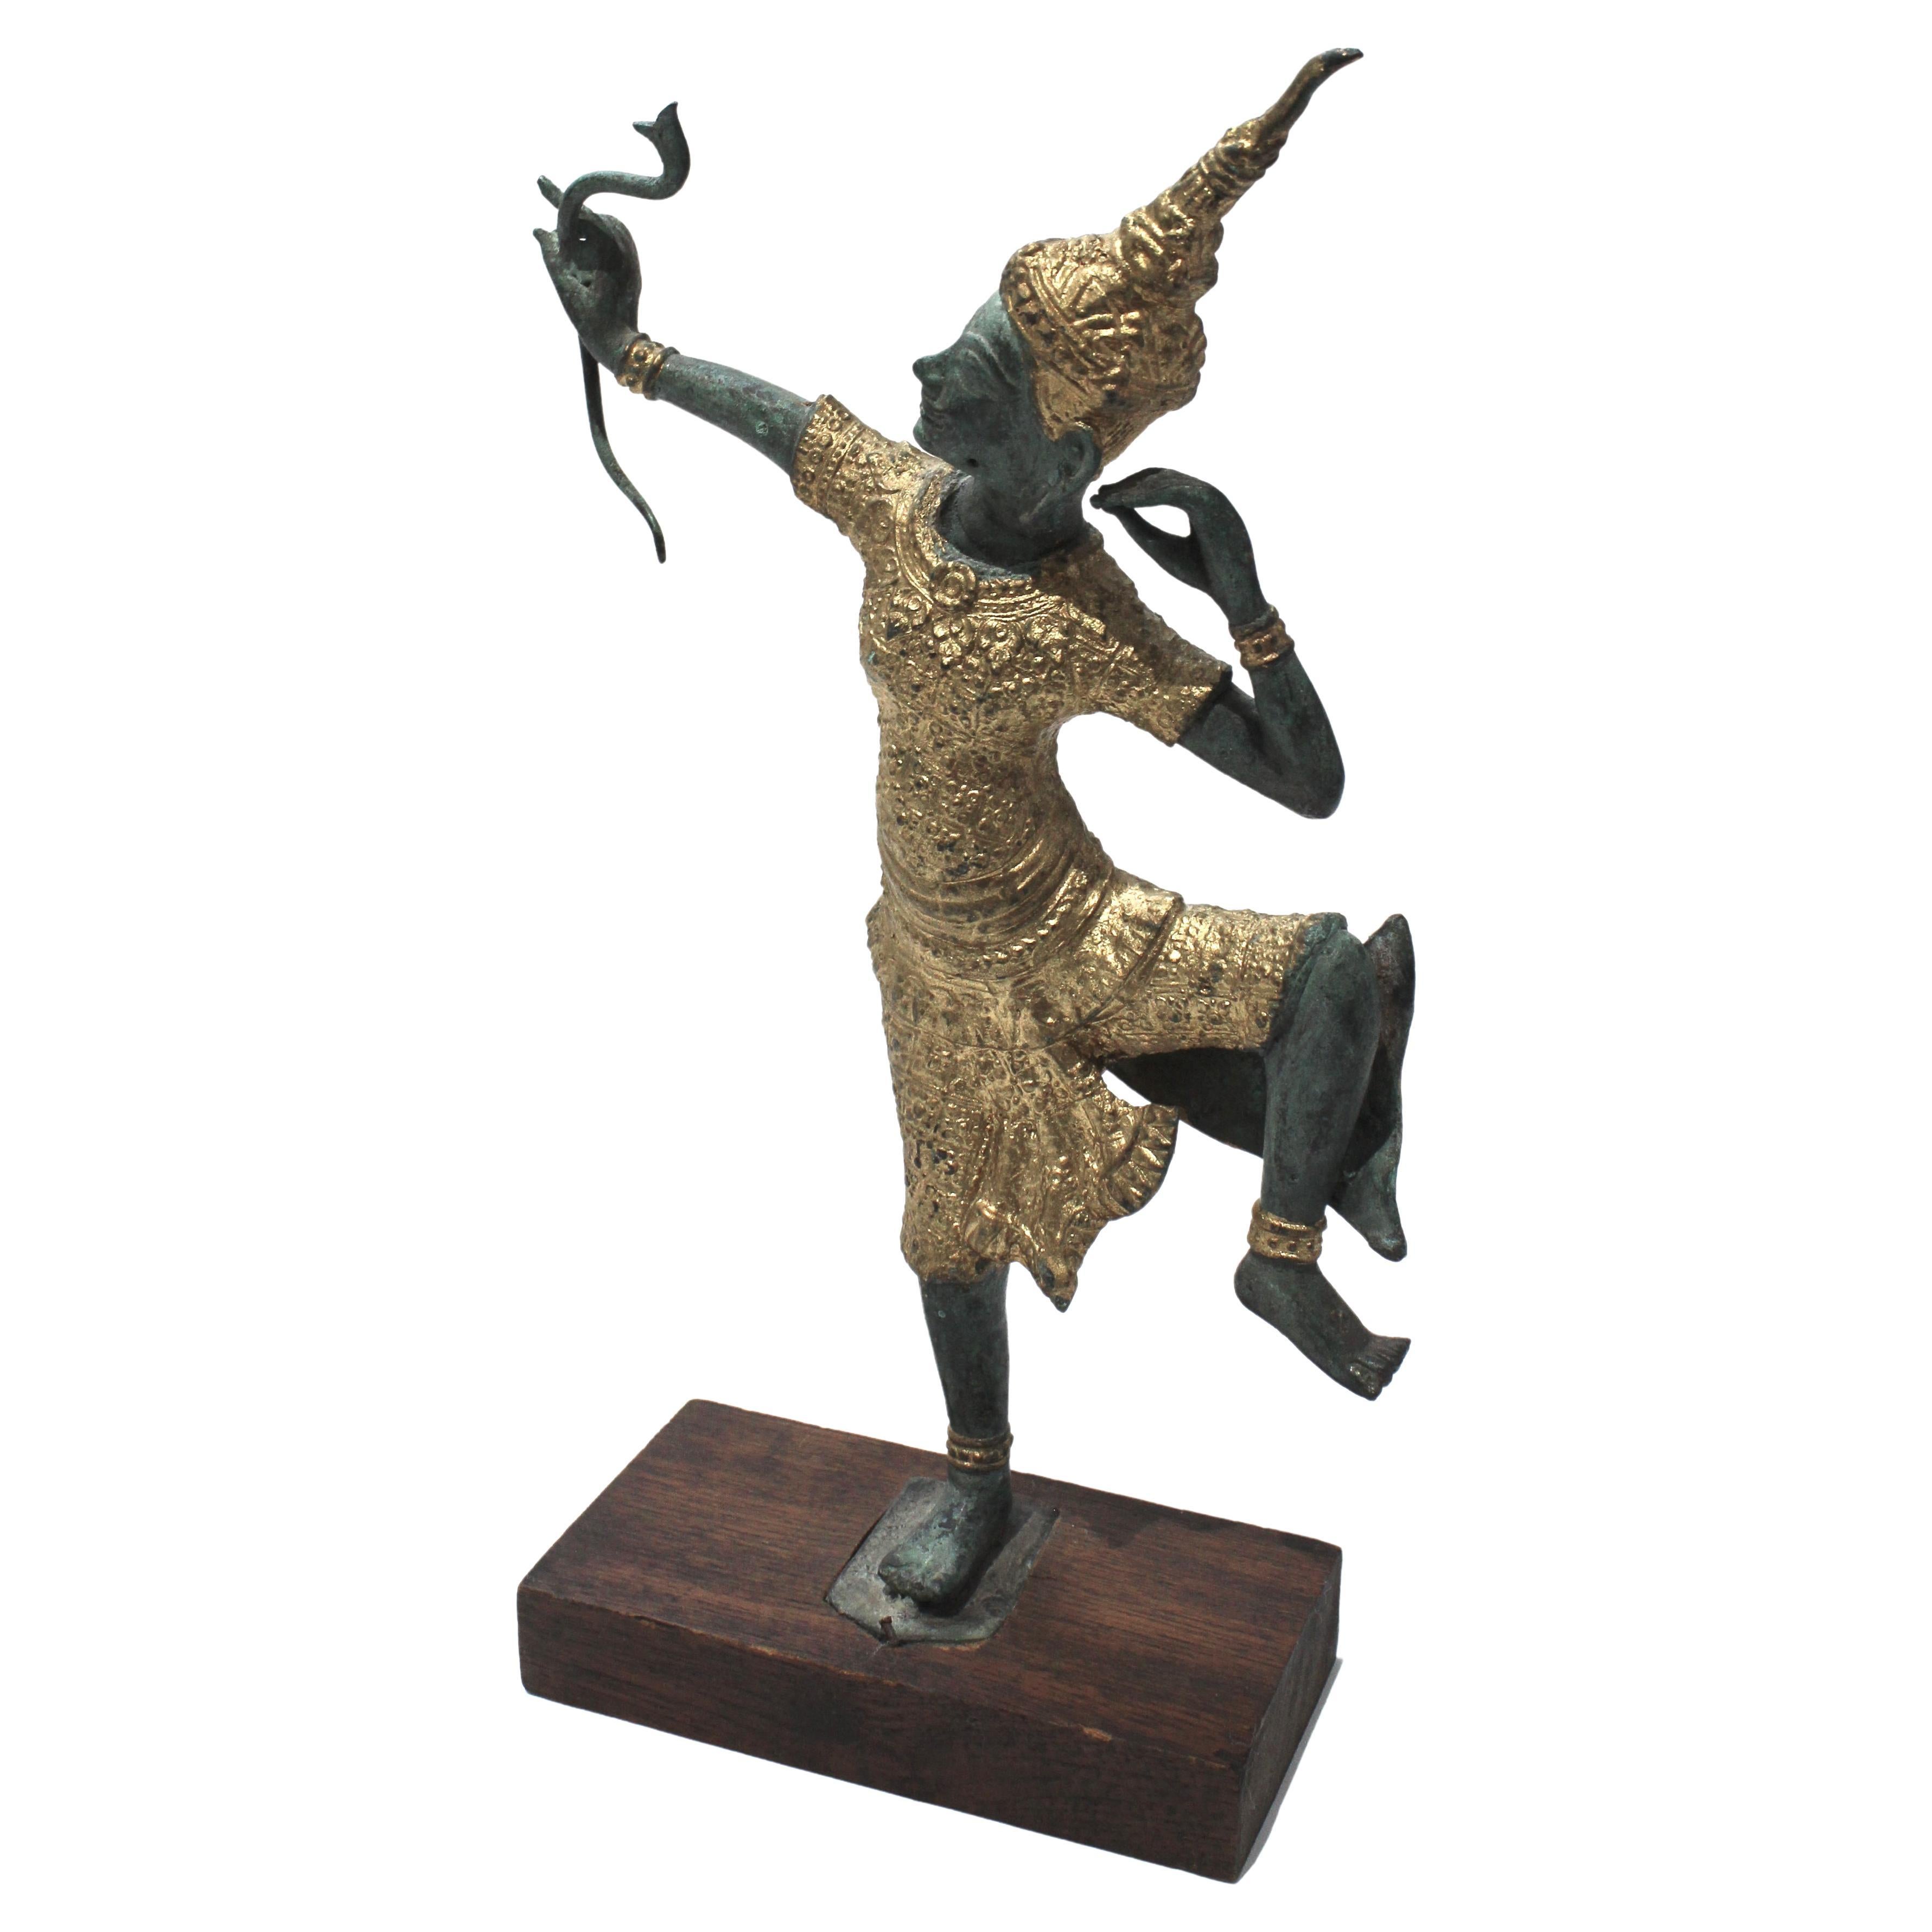 Limited Edition Brass Casting Skull Snake Viper figurine statue Z441 